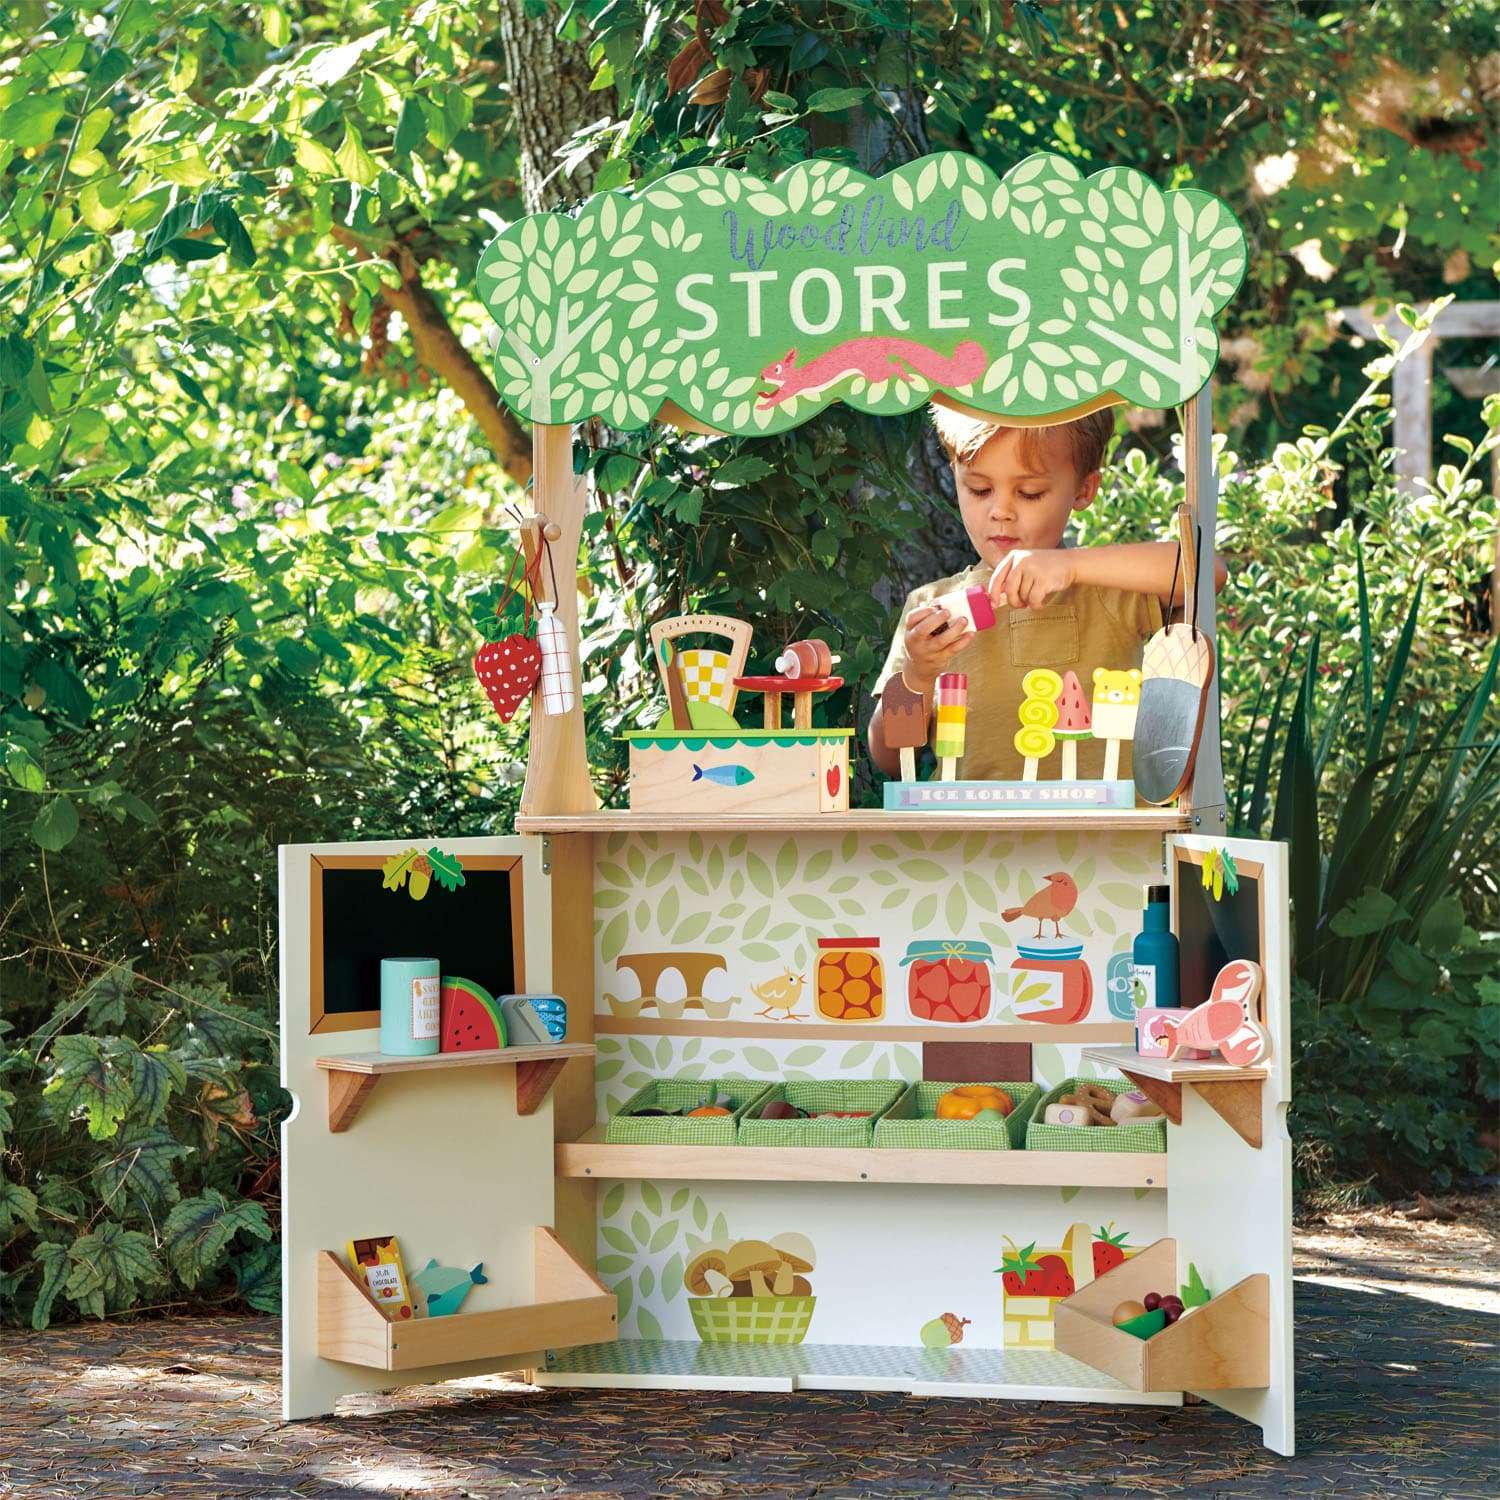 Tender Leaf Toys ของเล่นไม้ ร้านค้าและโรงละครไม้ Woodland Stores and Theatre